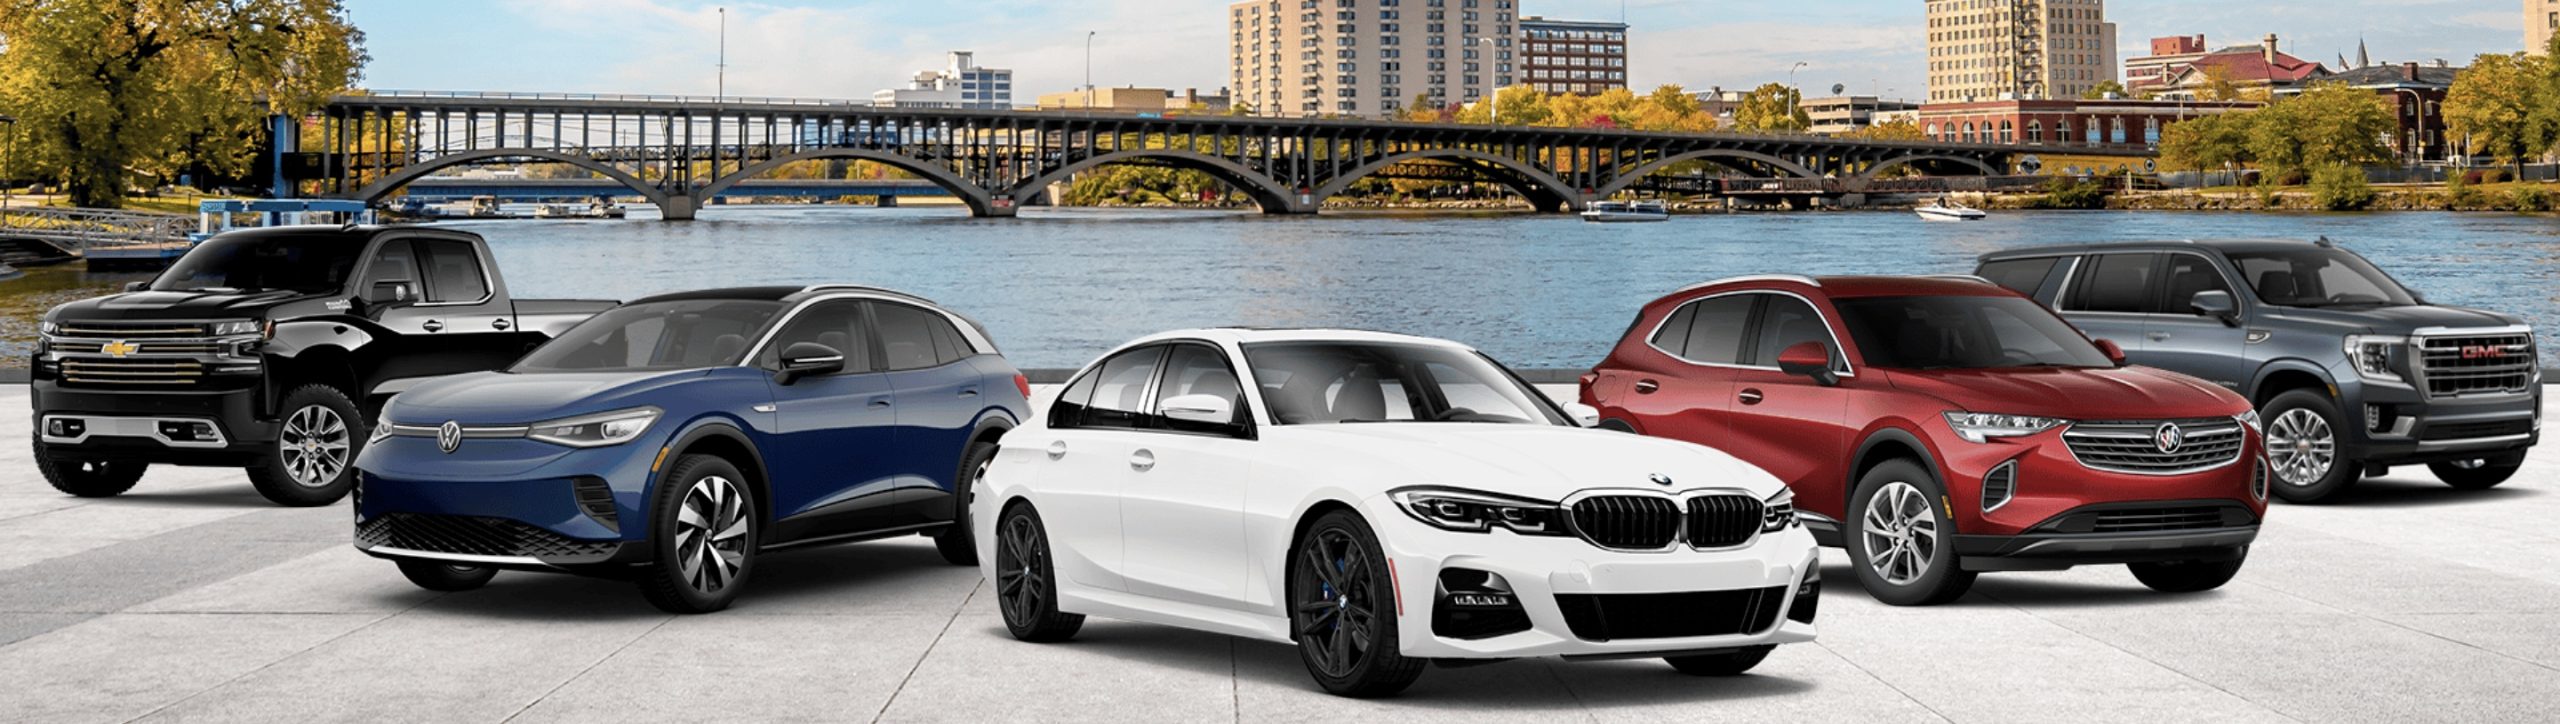 BMW Chicago Dealerships